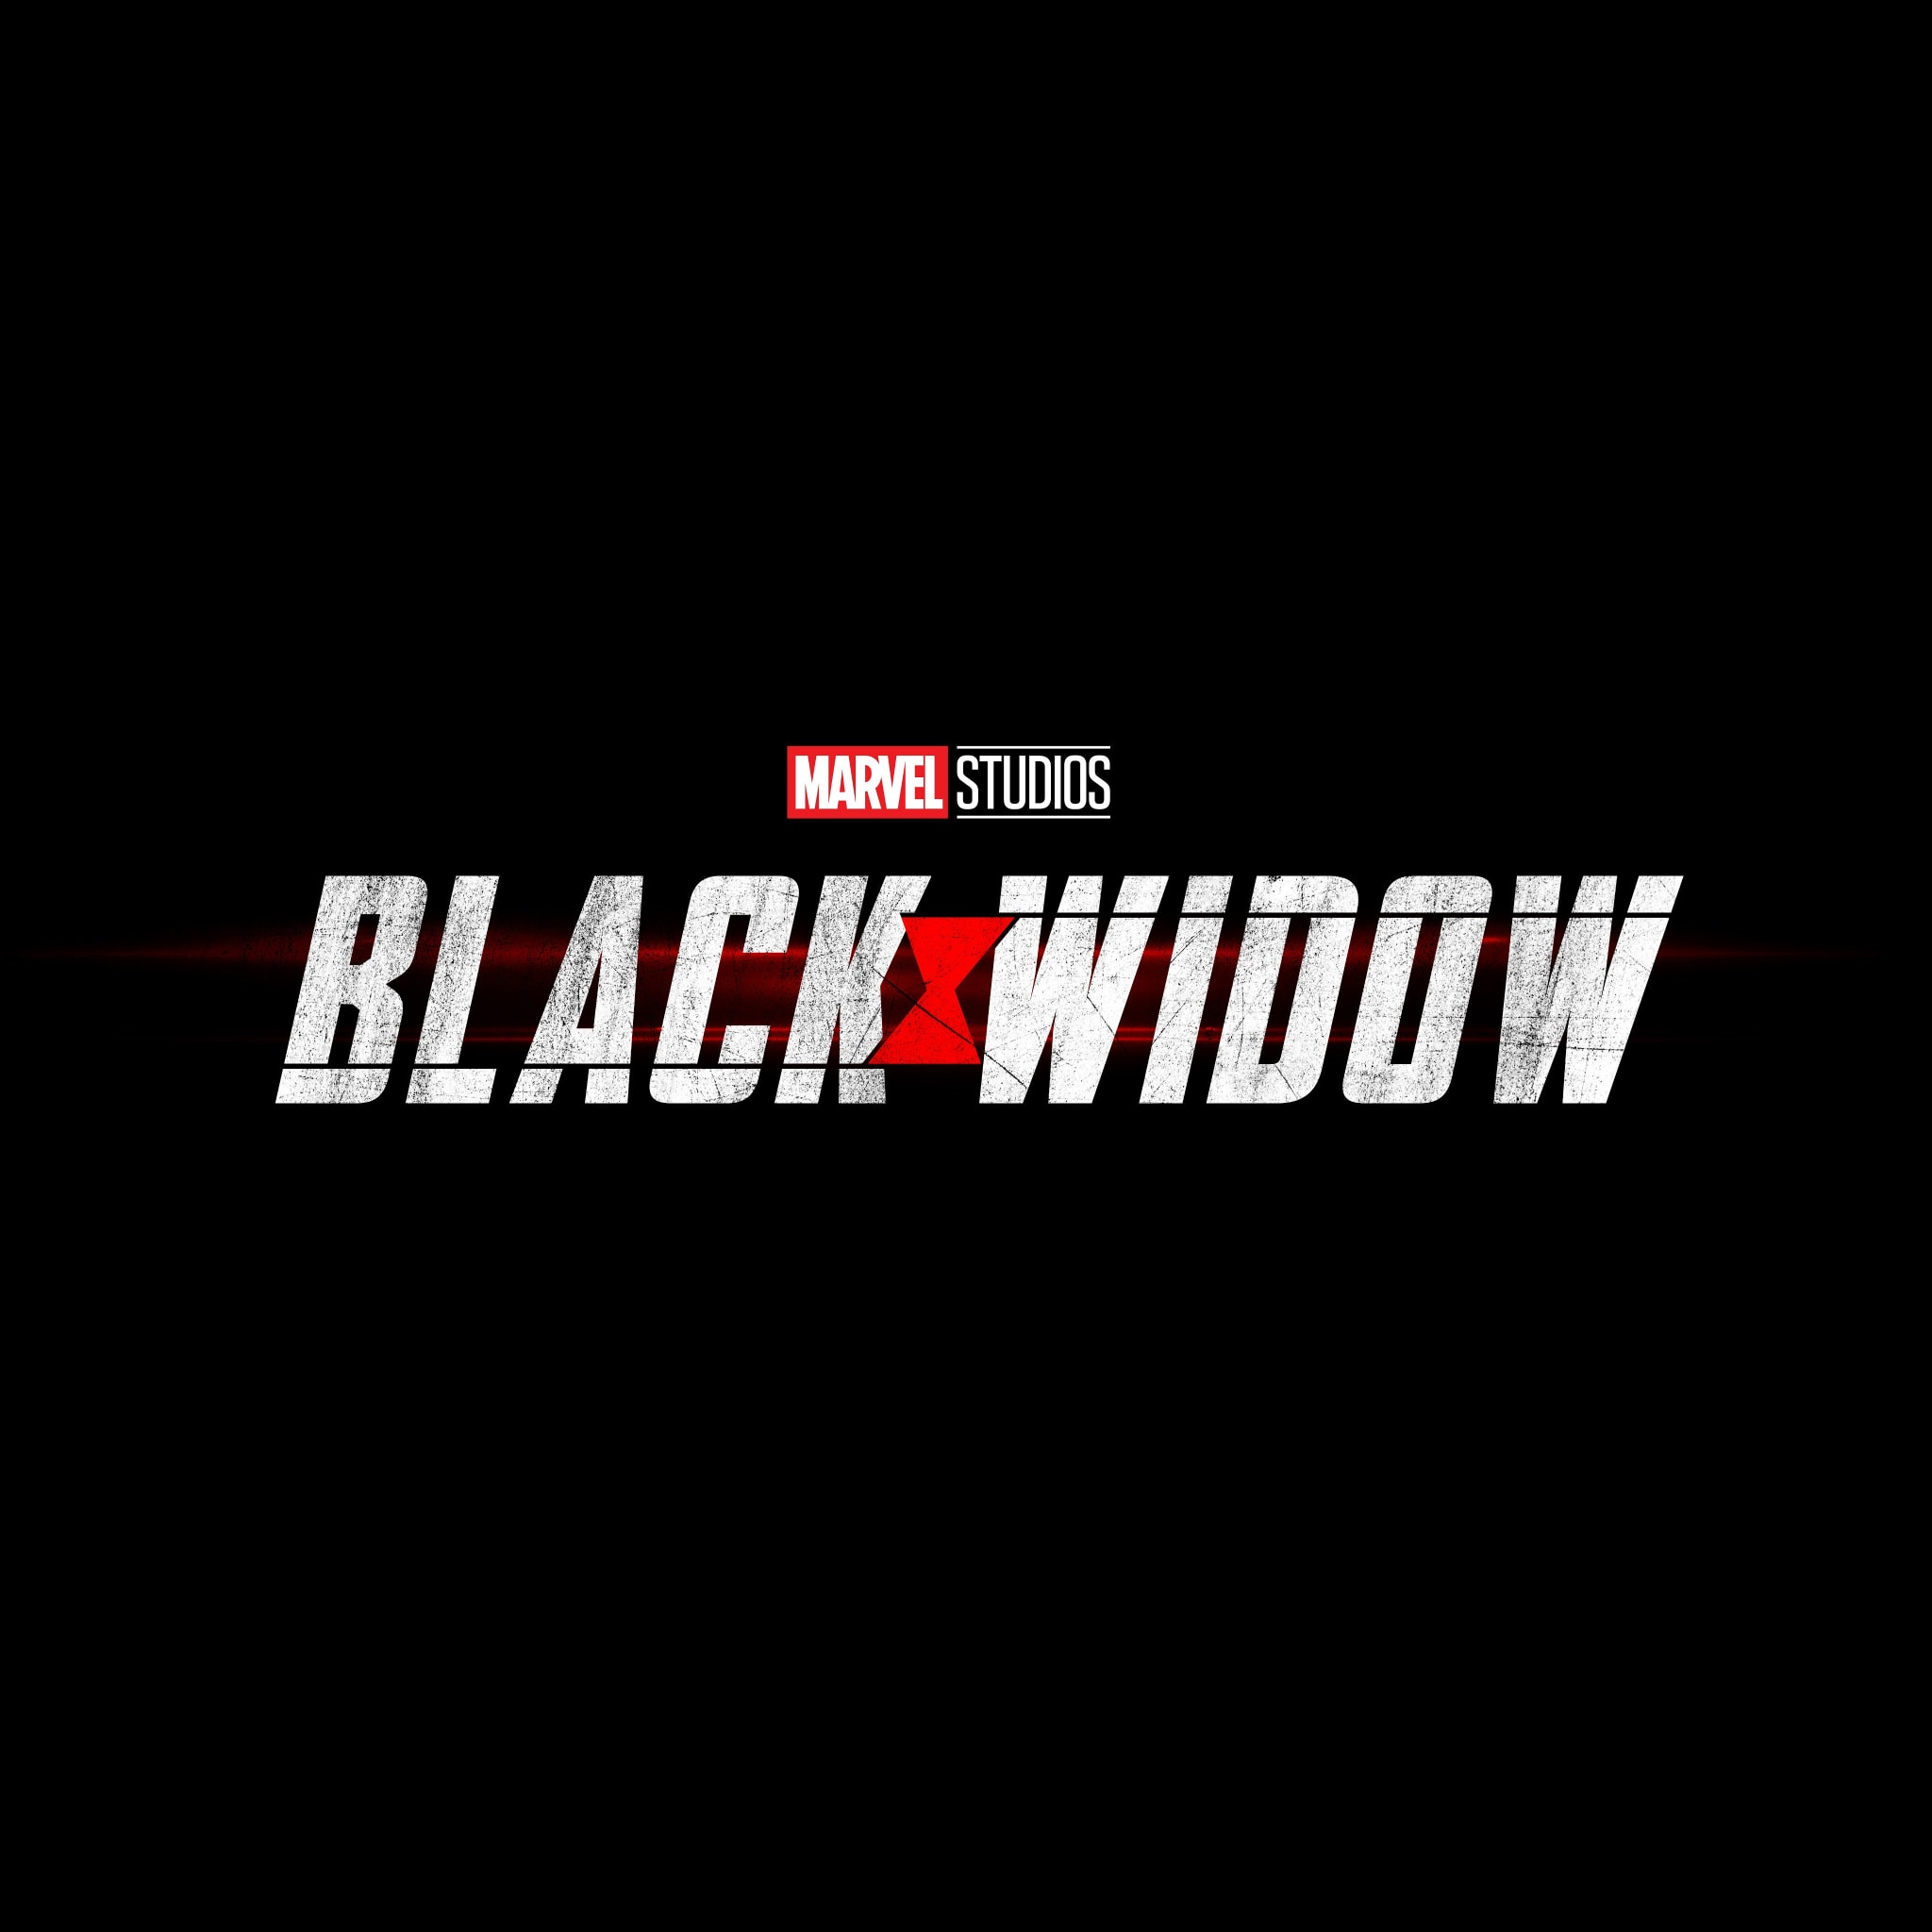 Black Widow 2020